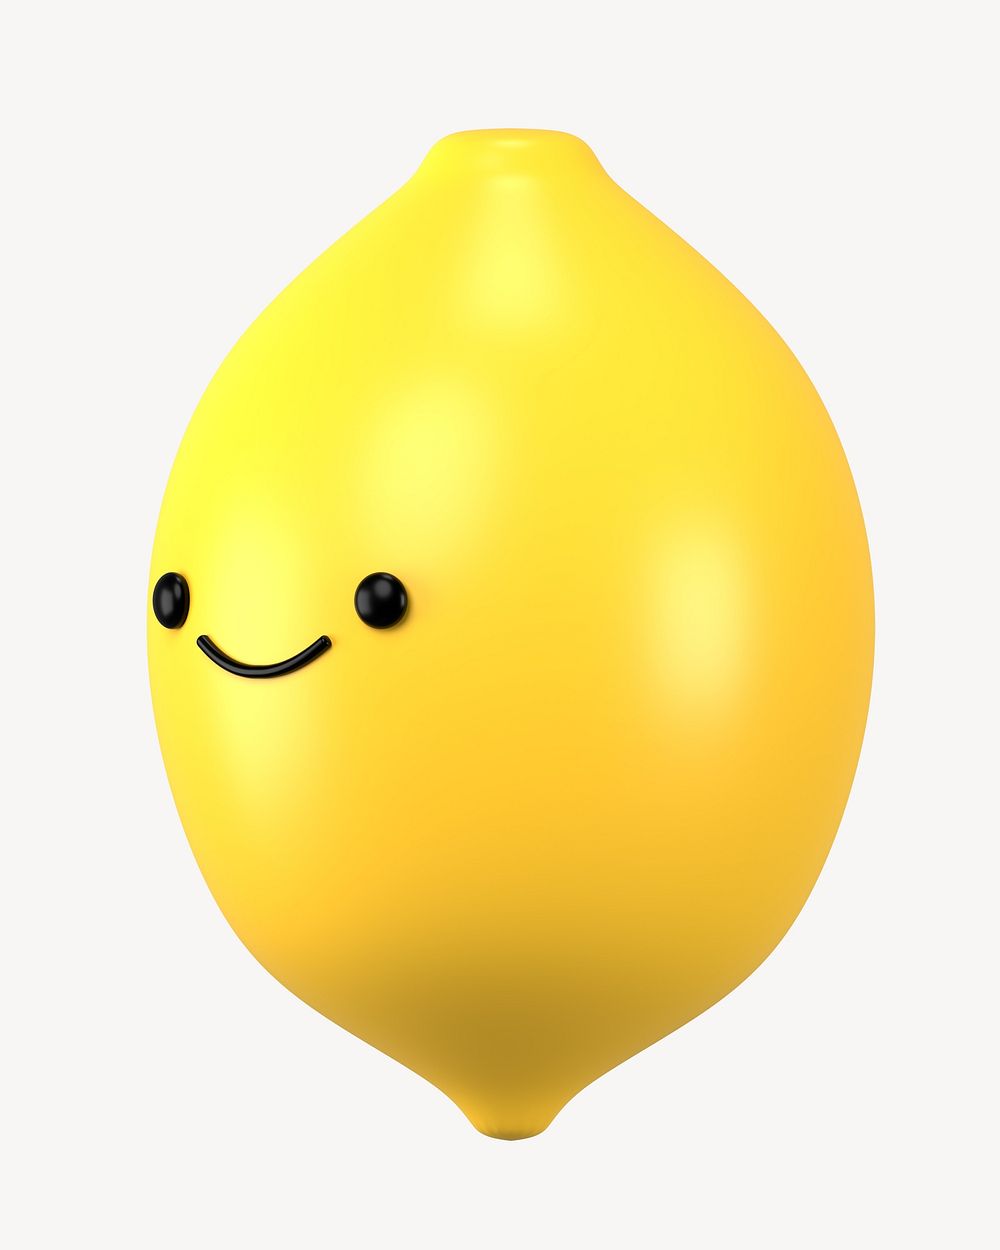 3D smiling lemon, emoticon illustration